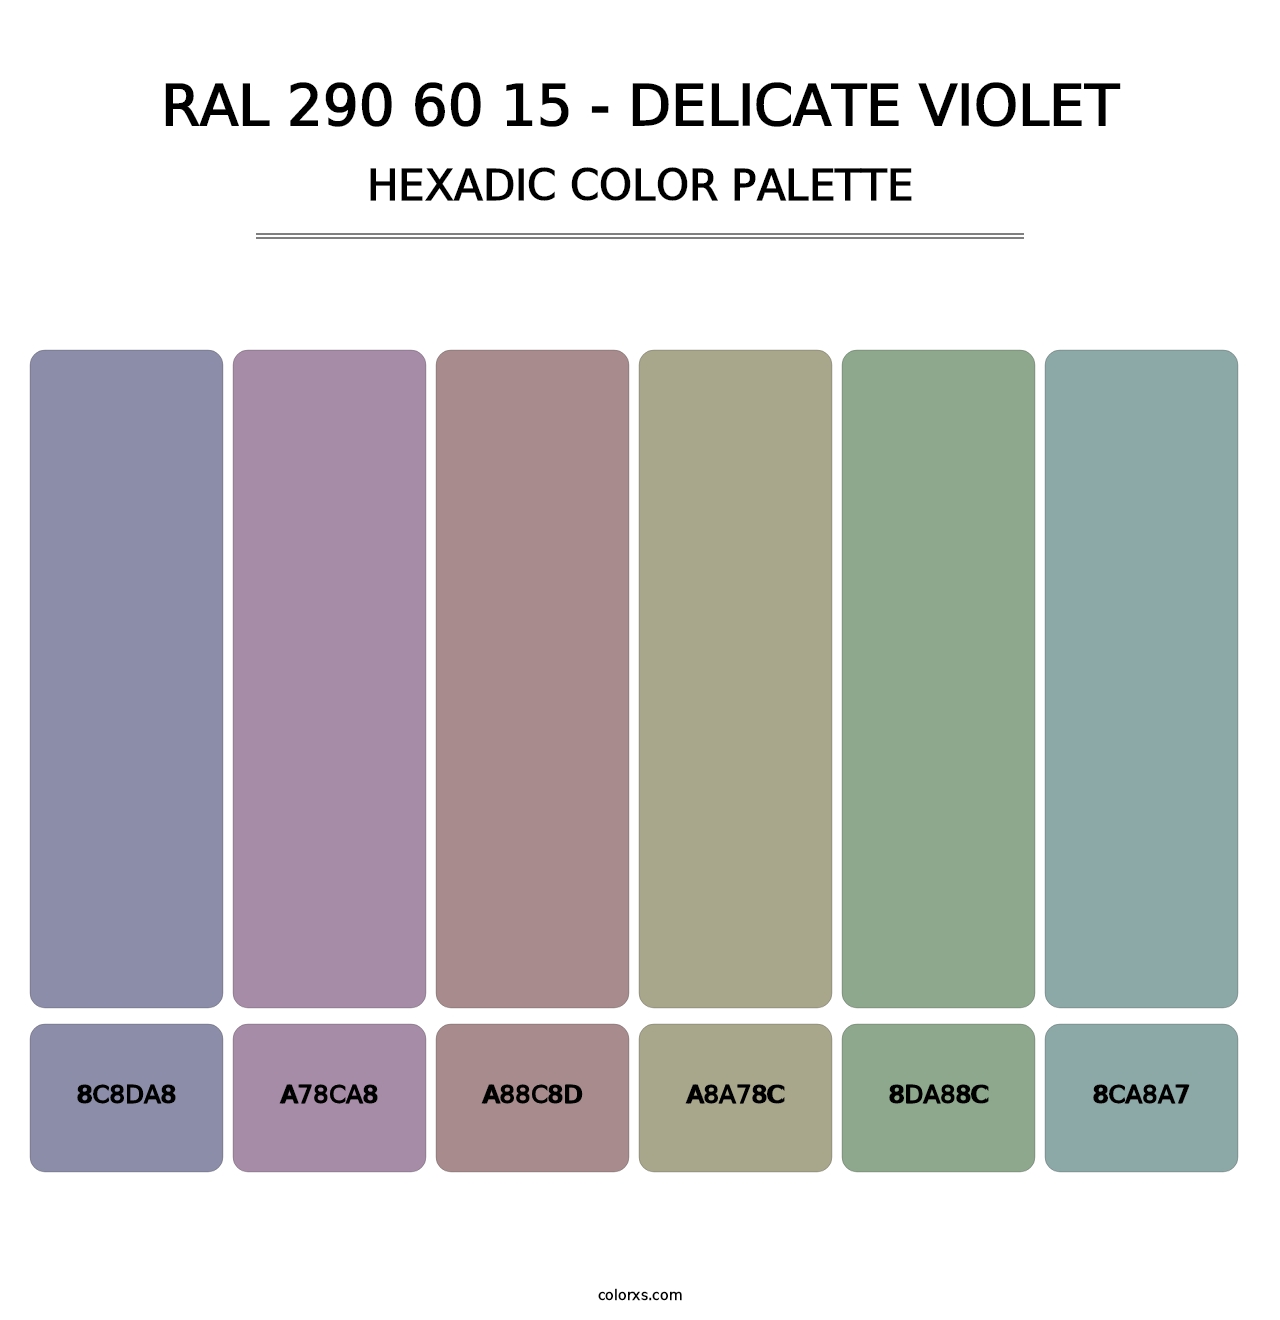 RAL 290 60 15 - Delicate Violet - Hexadic Color Palette